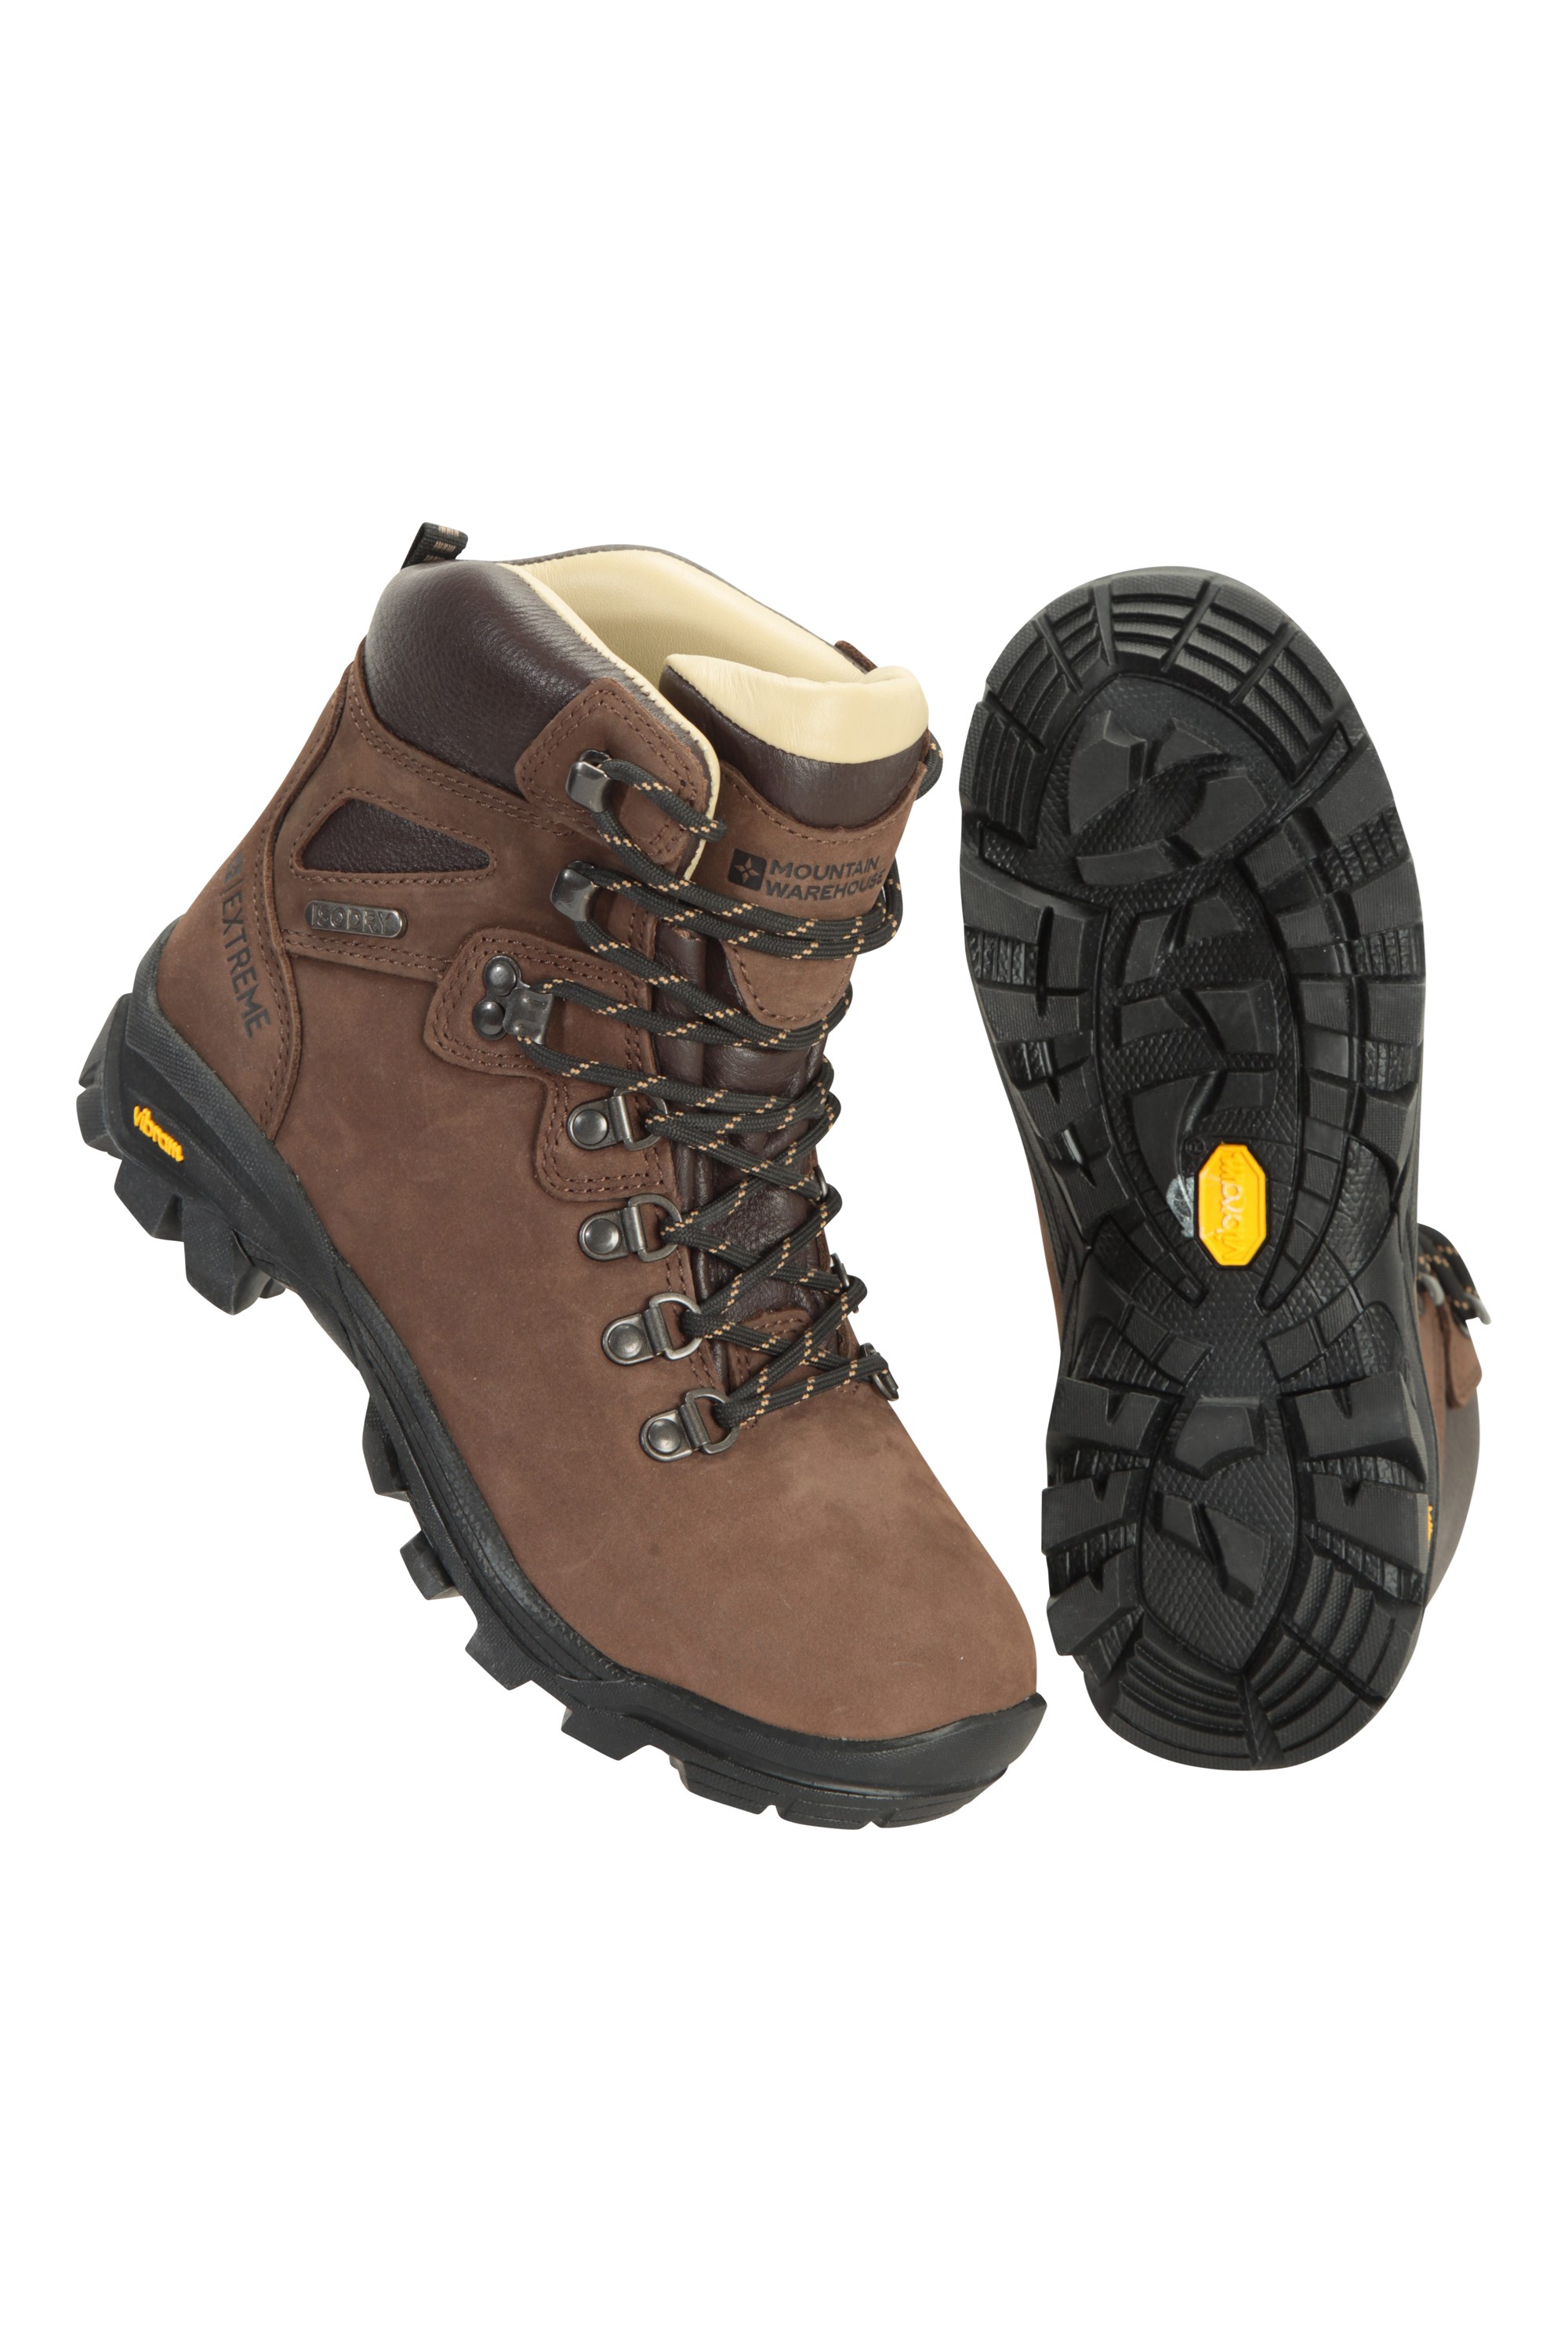 Mountain Warehouse Womens Waterproof Boots-Vibram Ladies Hiking Shoes 